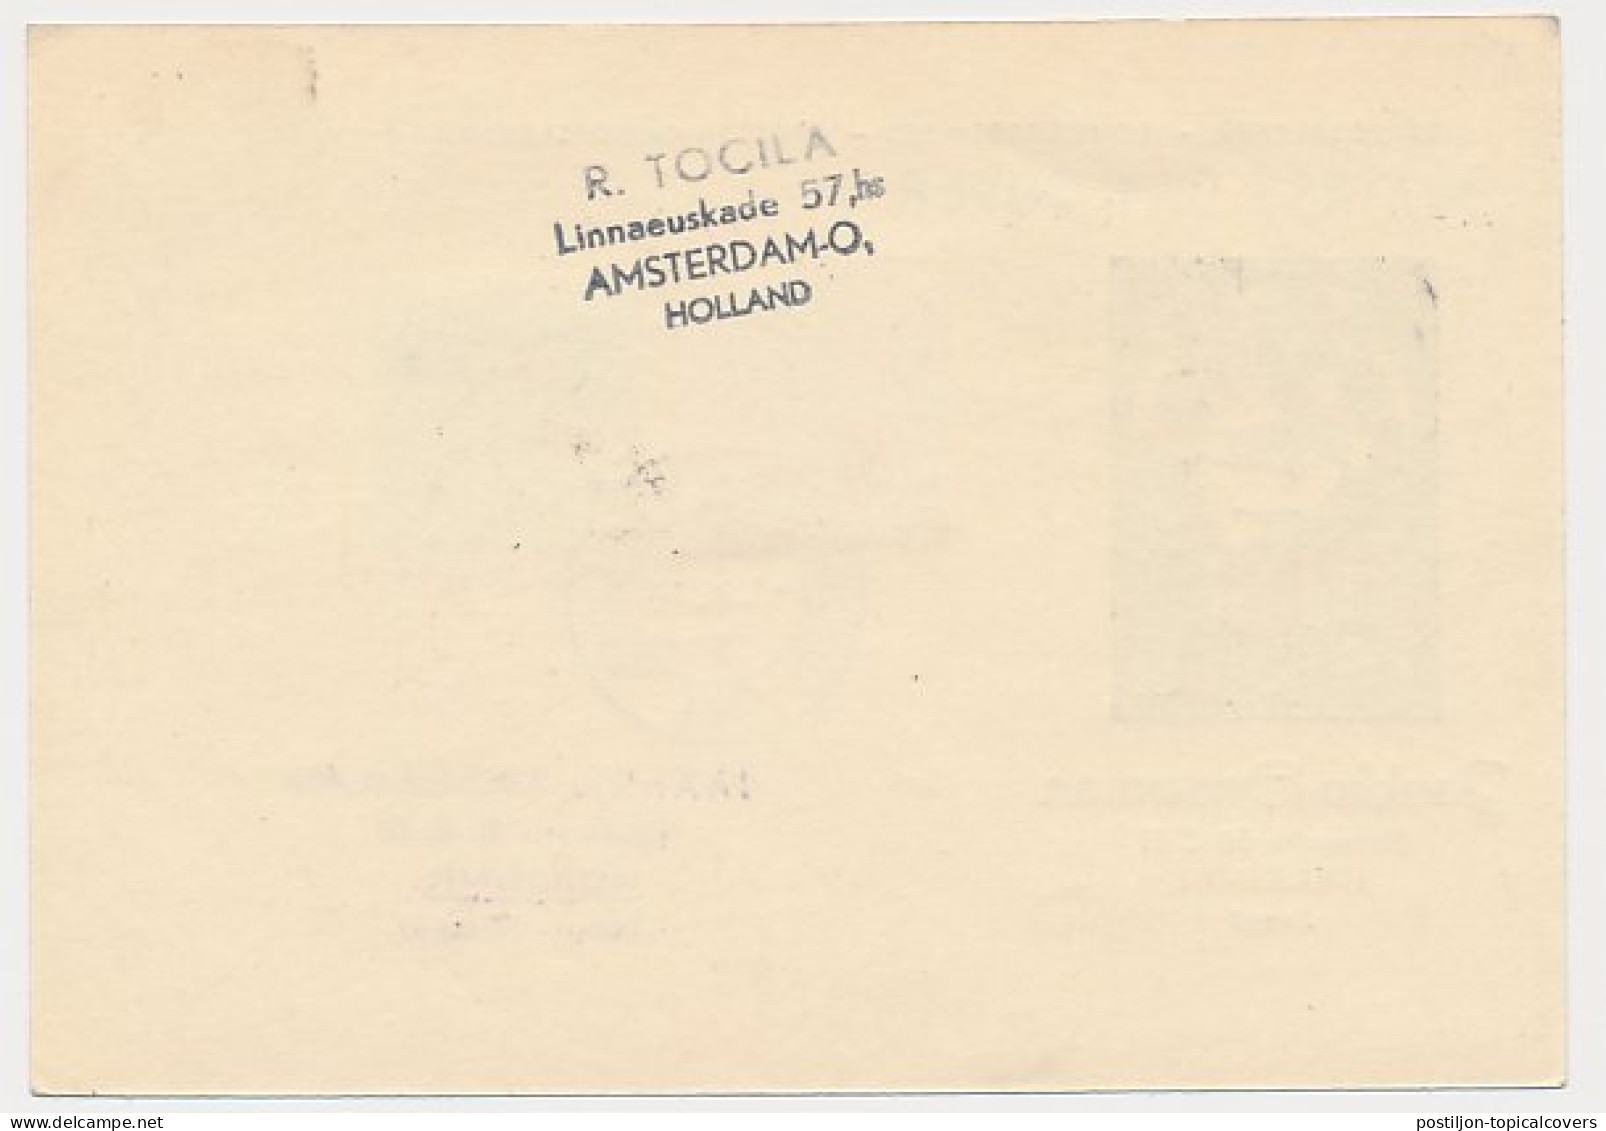 FDC / 1e Dag Em. Wereldpostvereniging 1949 - Unclassified